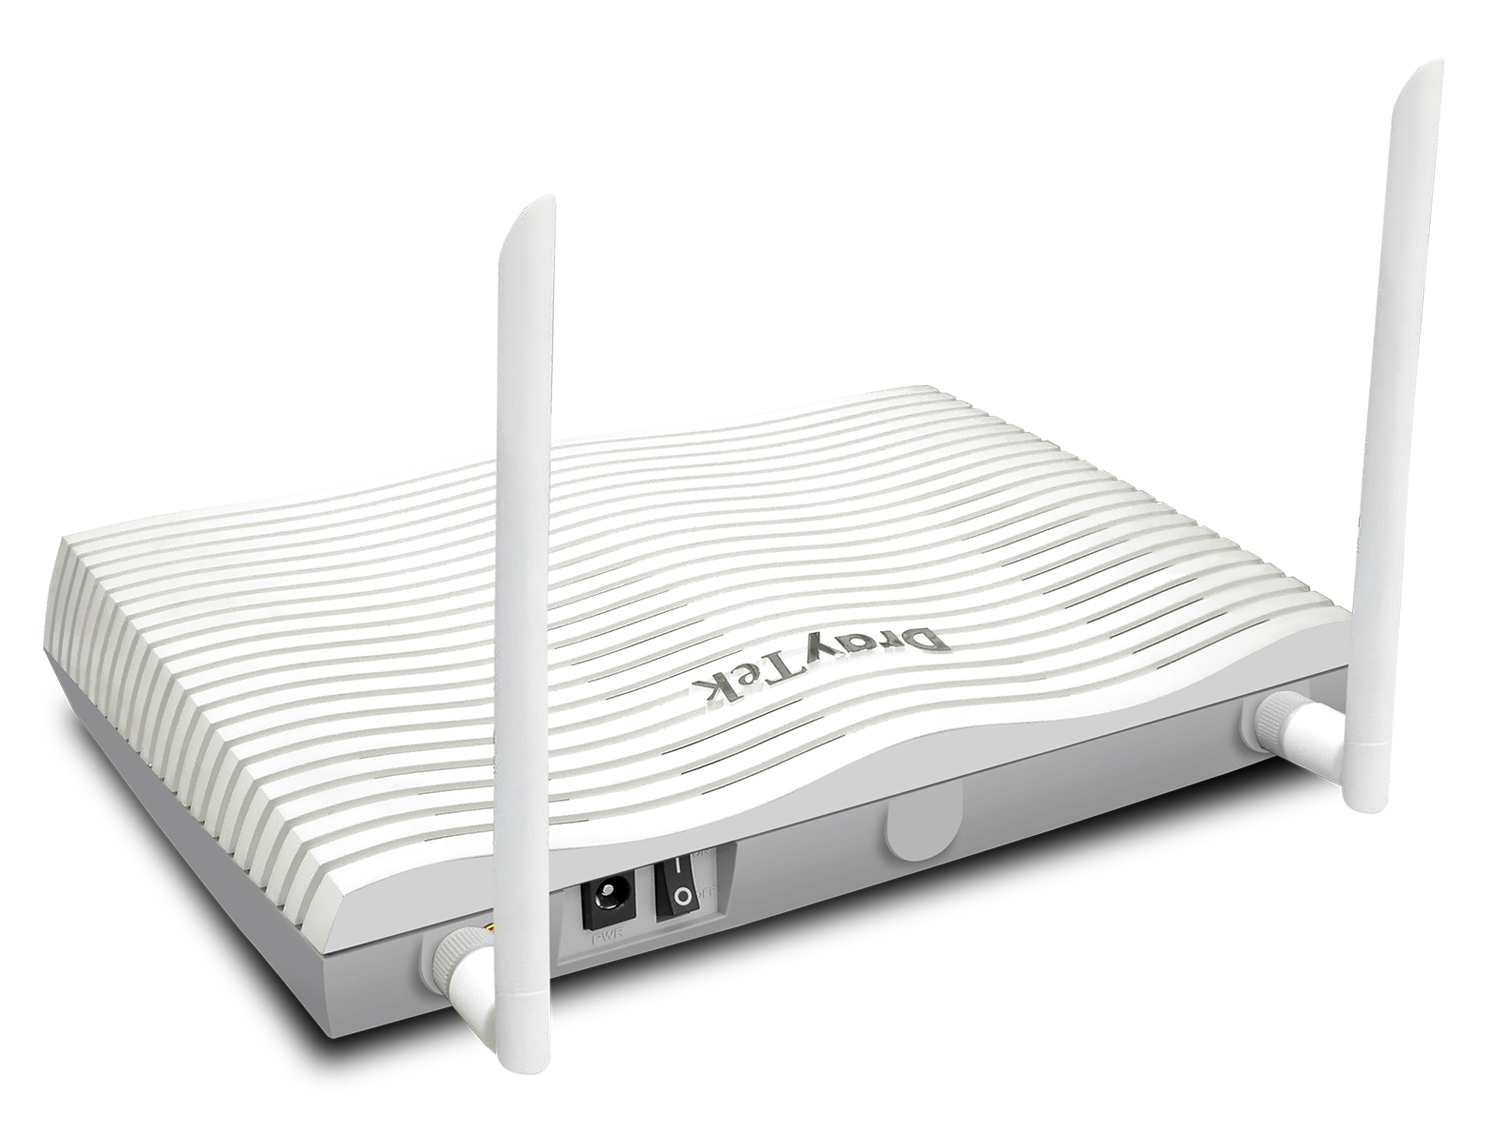 Draytek Vigor 2865Ac - Wi-Fi 5 (802.11ac) - Dual-Band (2,4 GHz/5 GHz) - Eingebauter Ethernet-Anschluss - ADSL - Weiß - Tabletop-Router